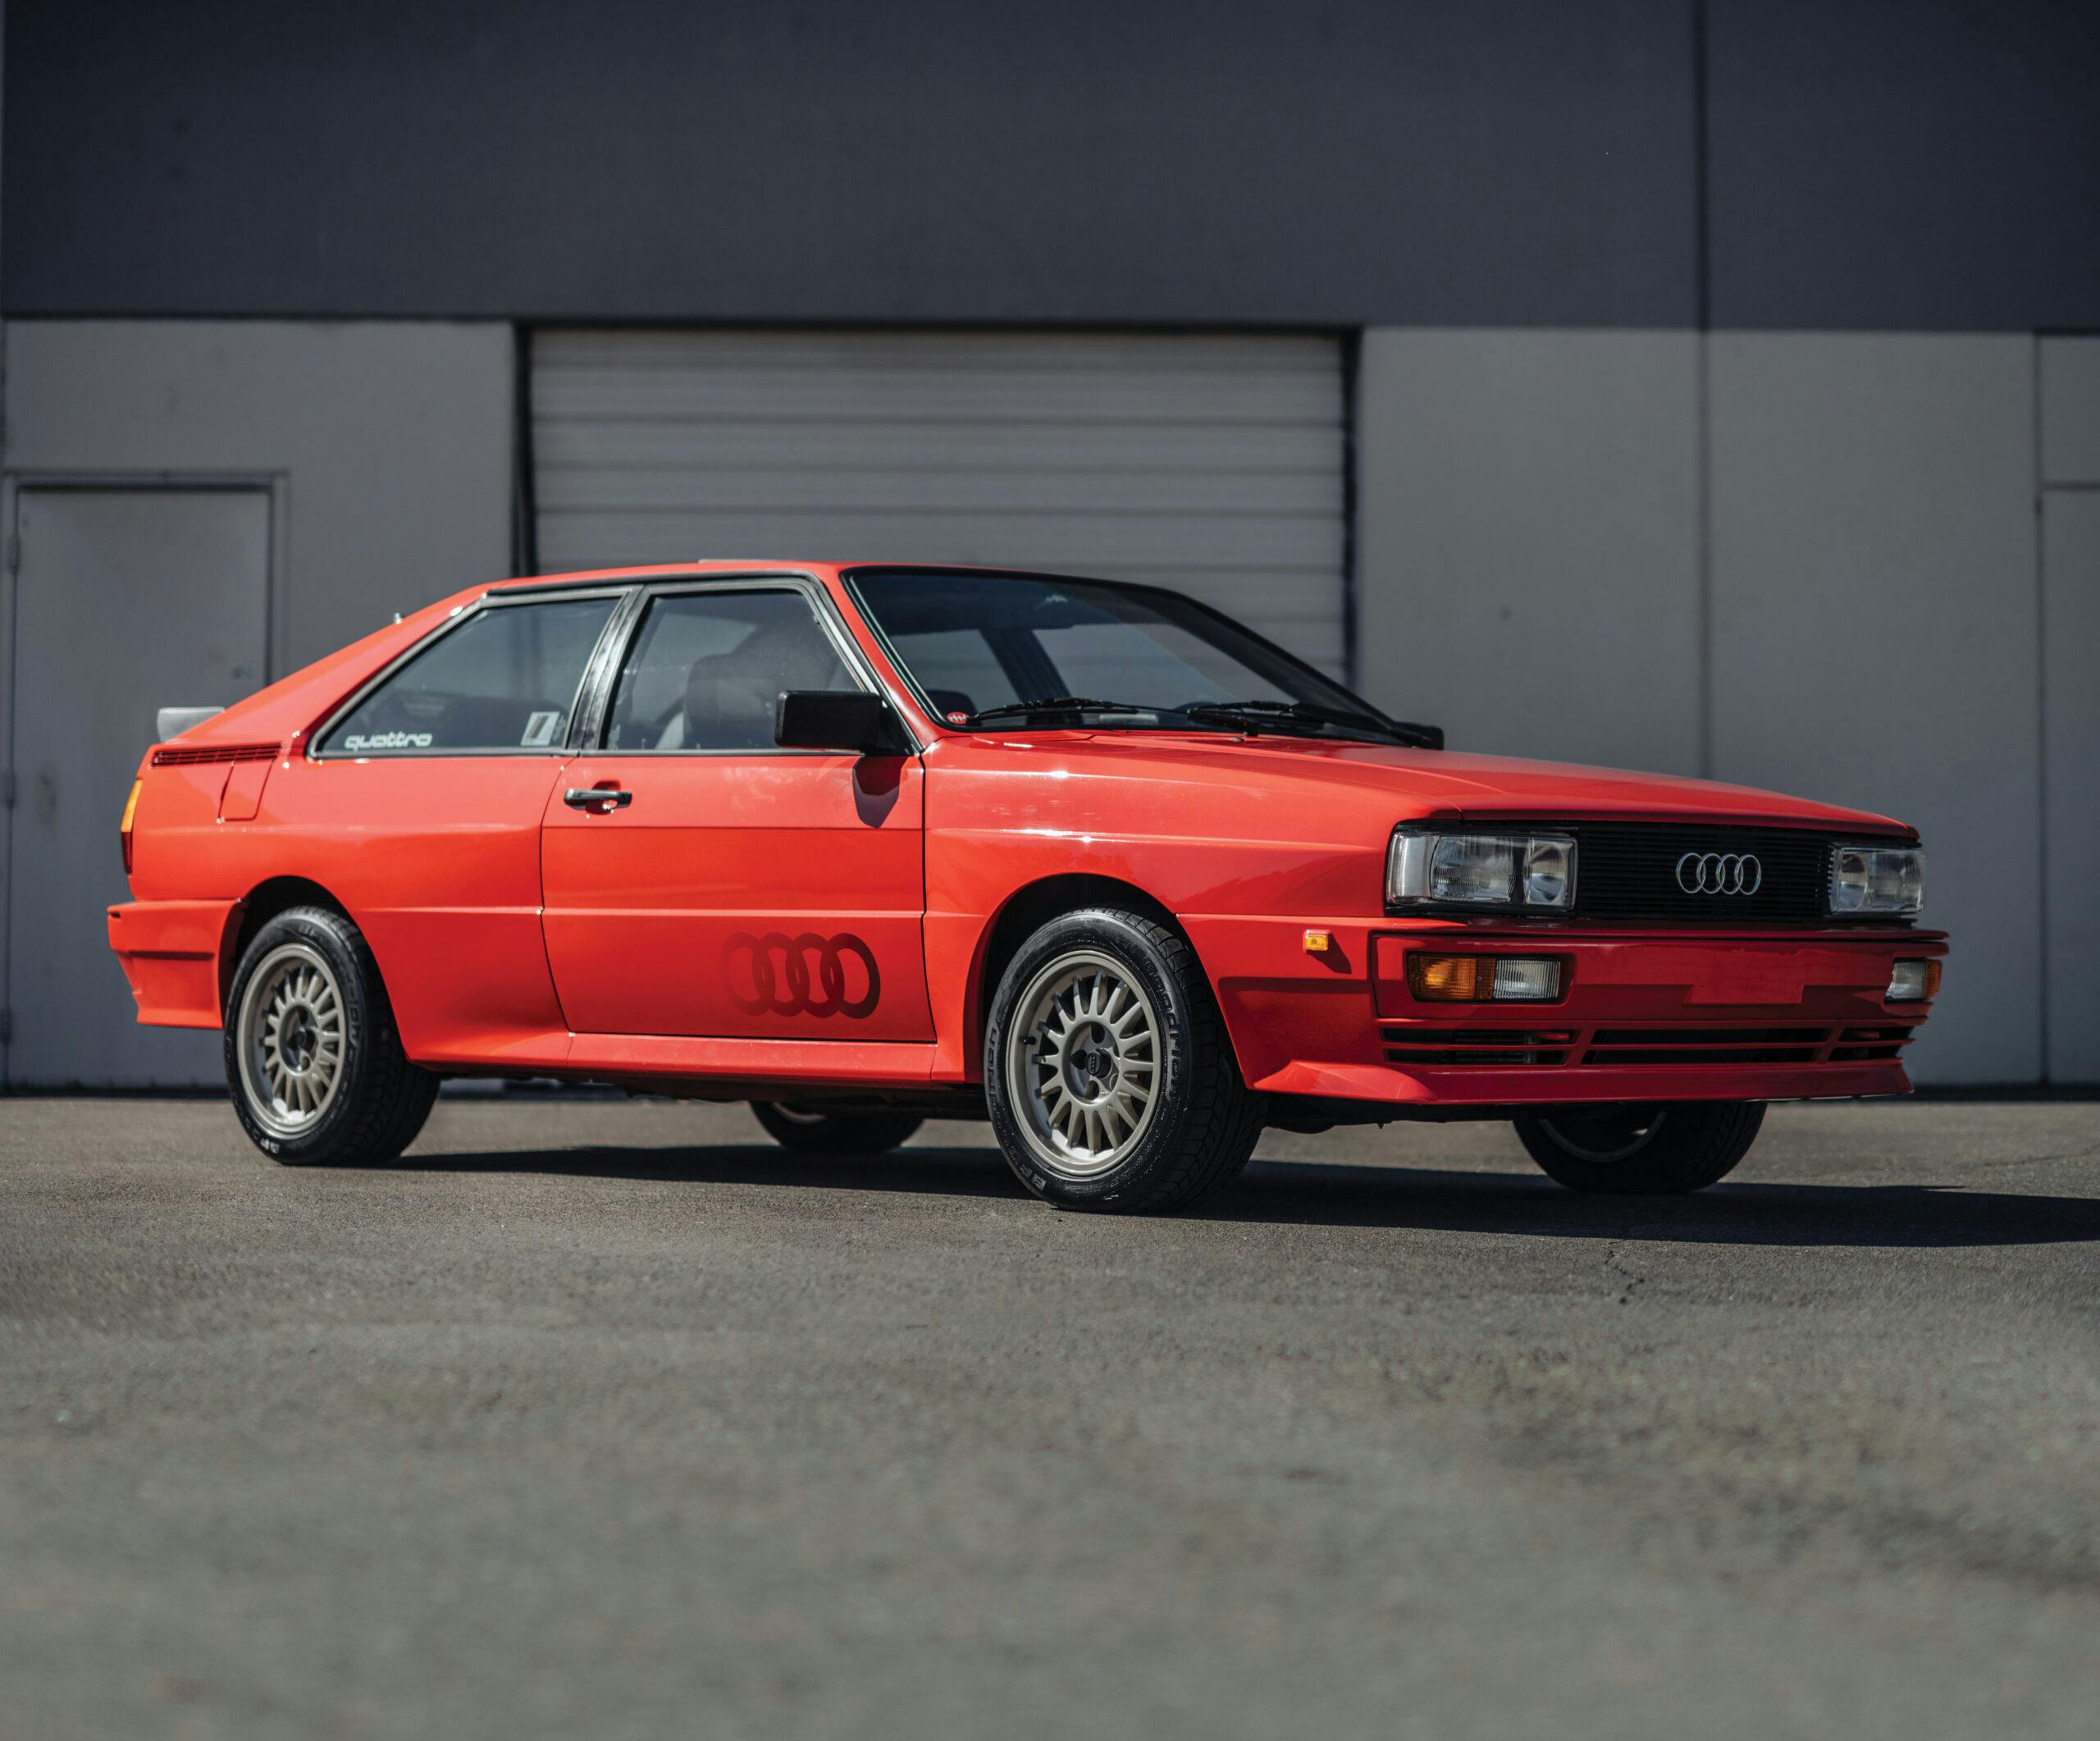 1989 Audi 80 review: Retro Road Test